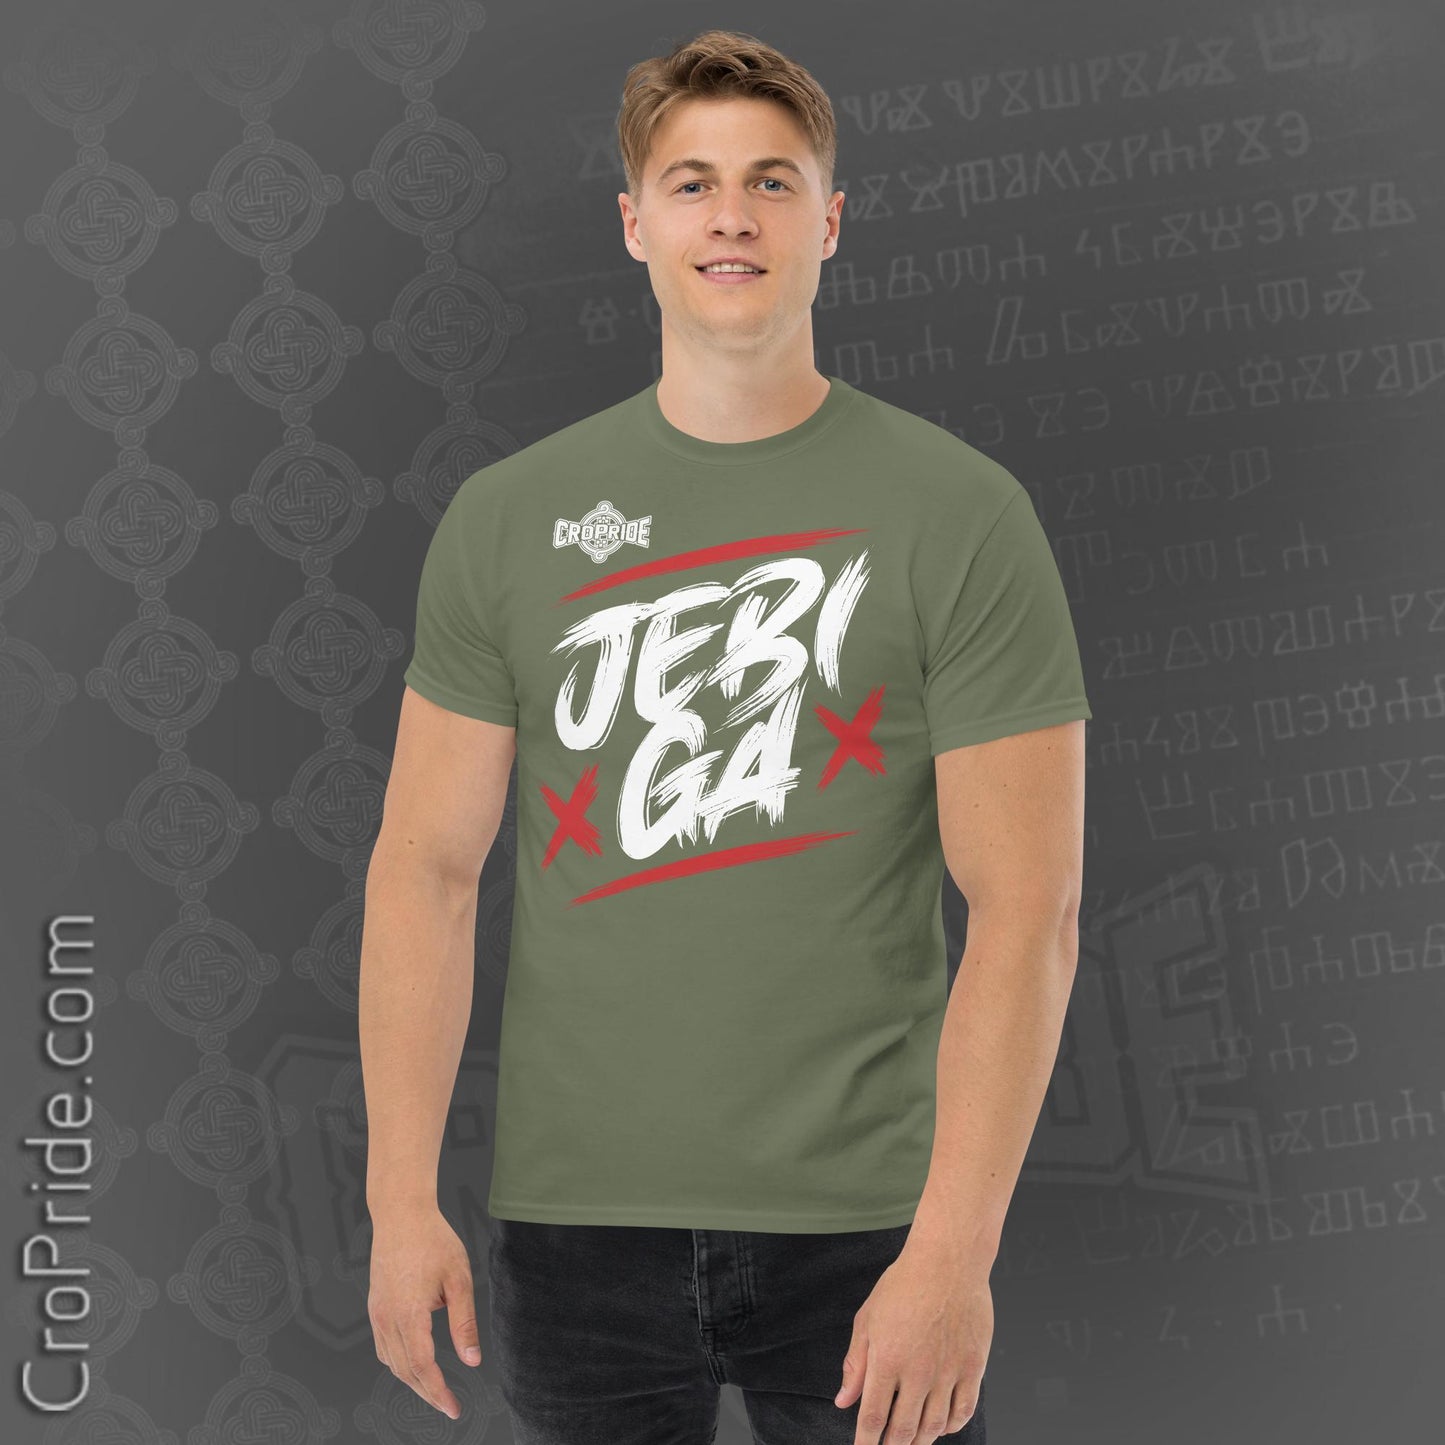 "Jebi Ga' CroPride Gear Designed T-Shirt